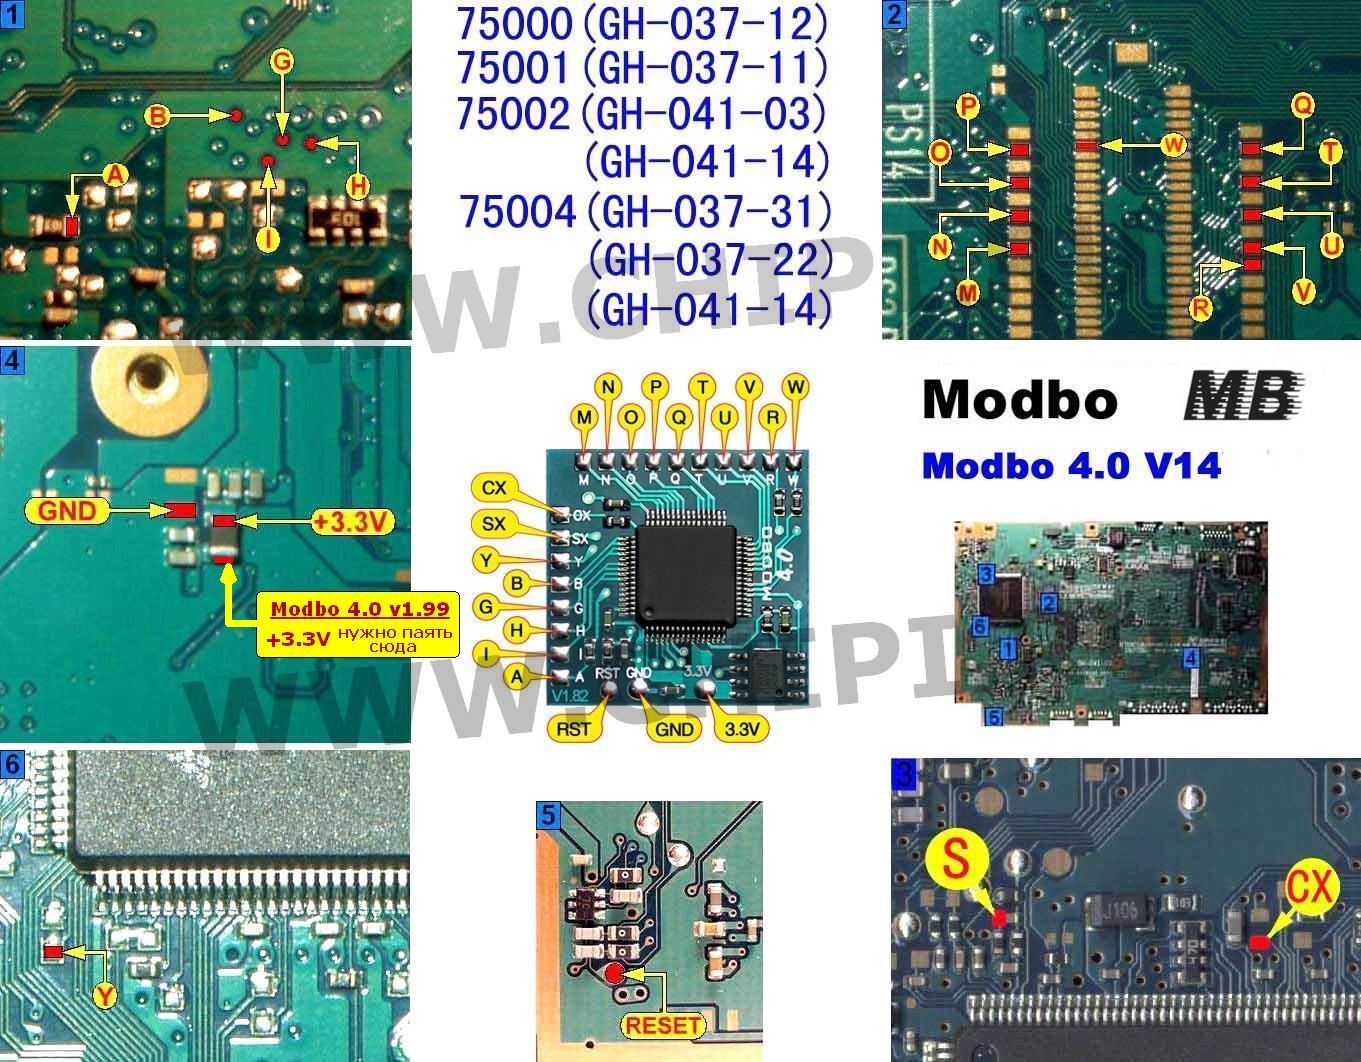 Chip modbo ps2 инструкция